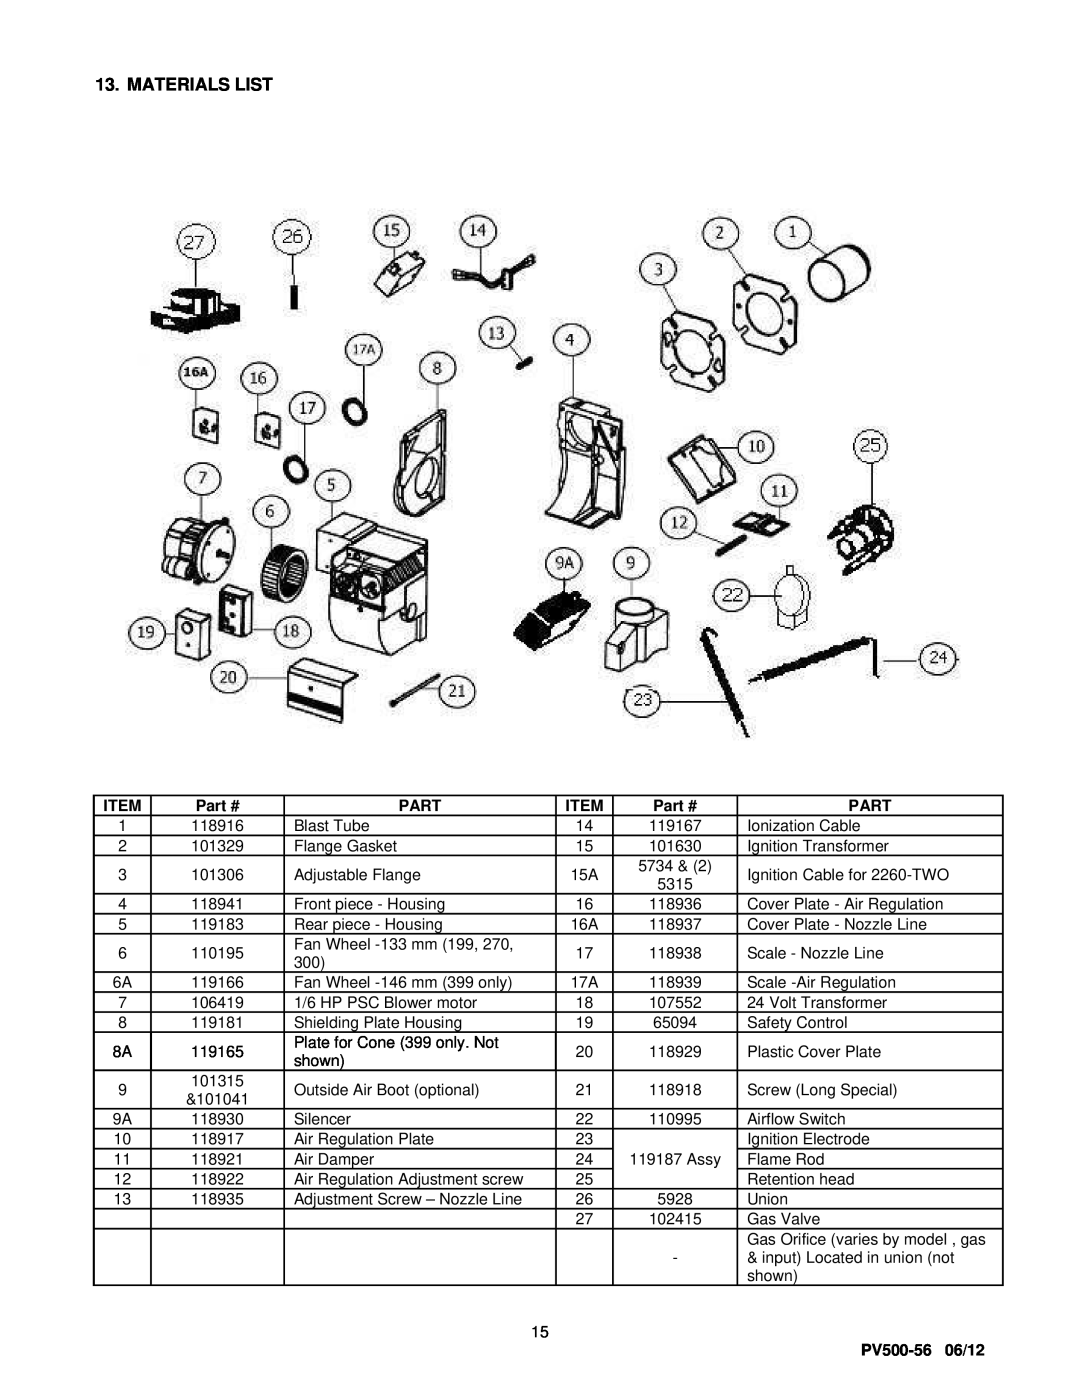 PVI Industries SU-3 manual Part, PV500-5606/12 